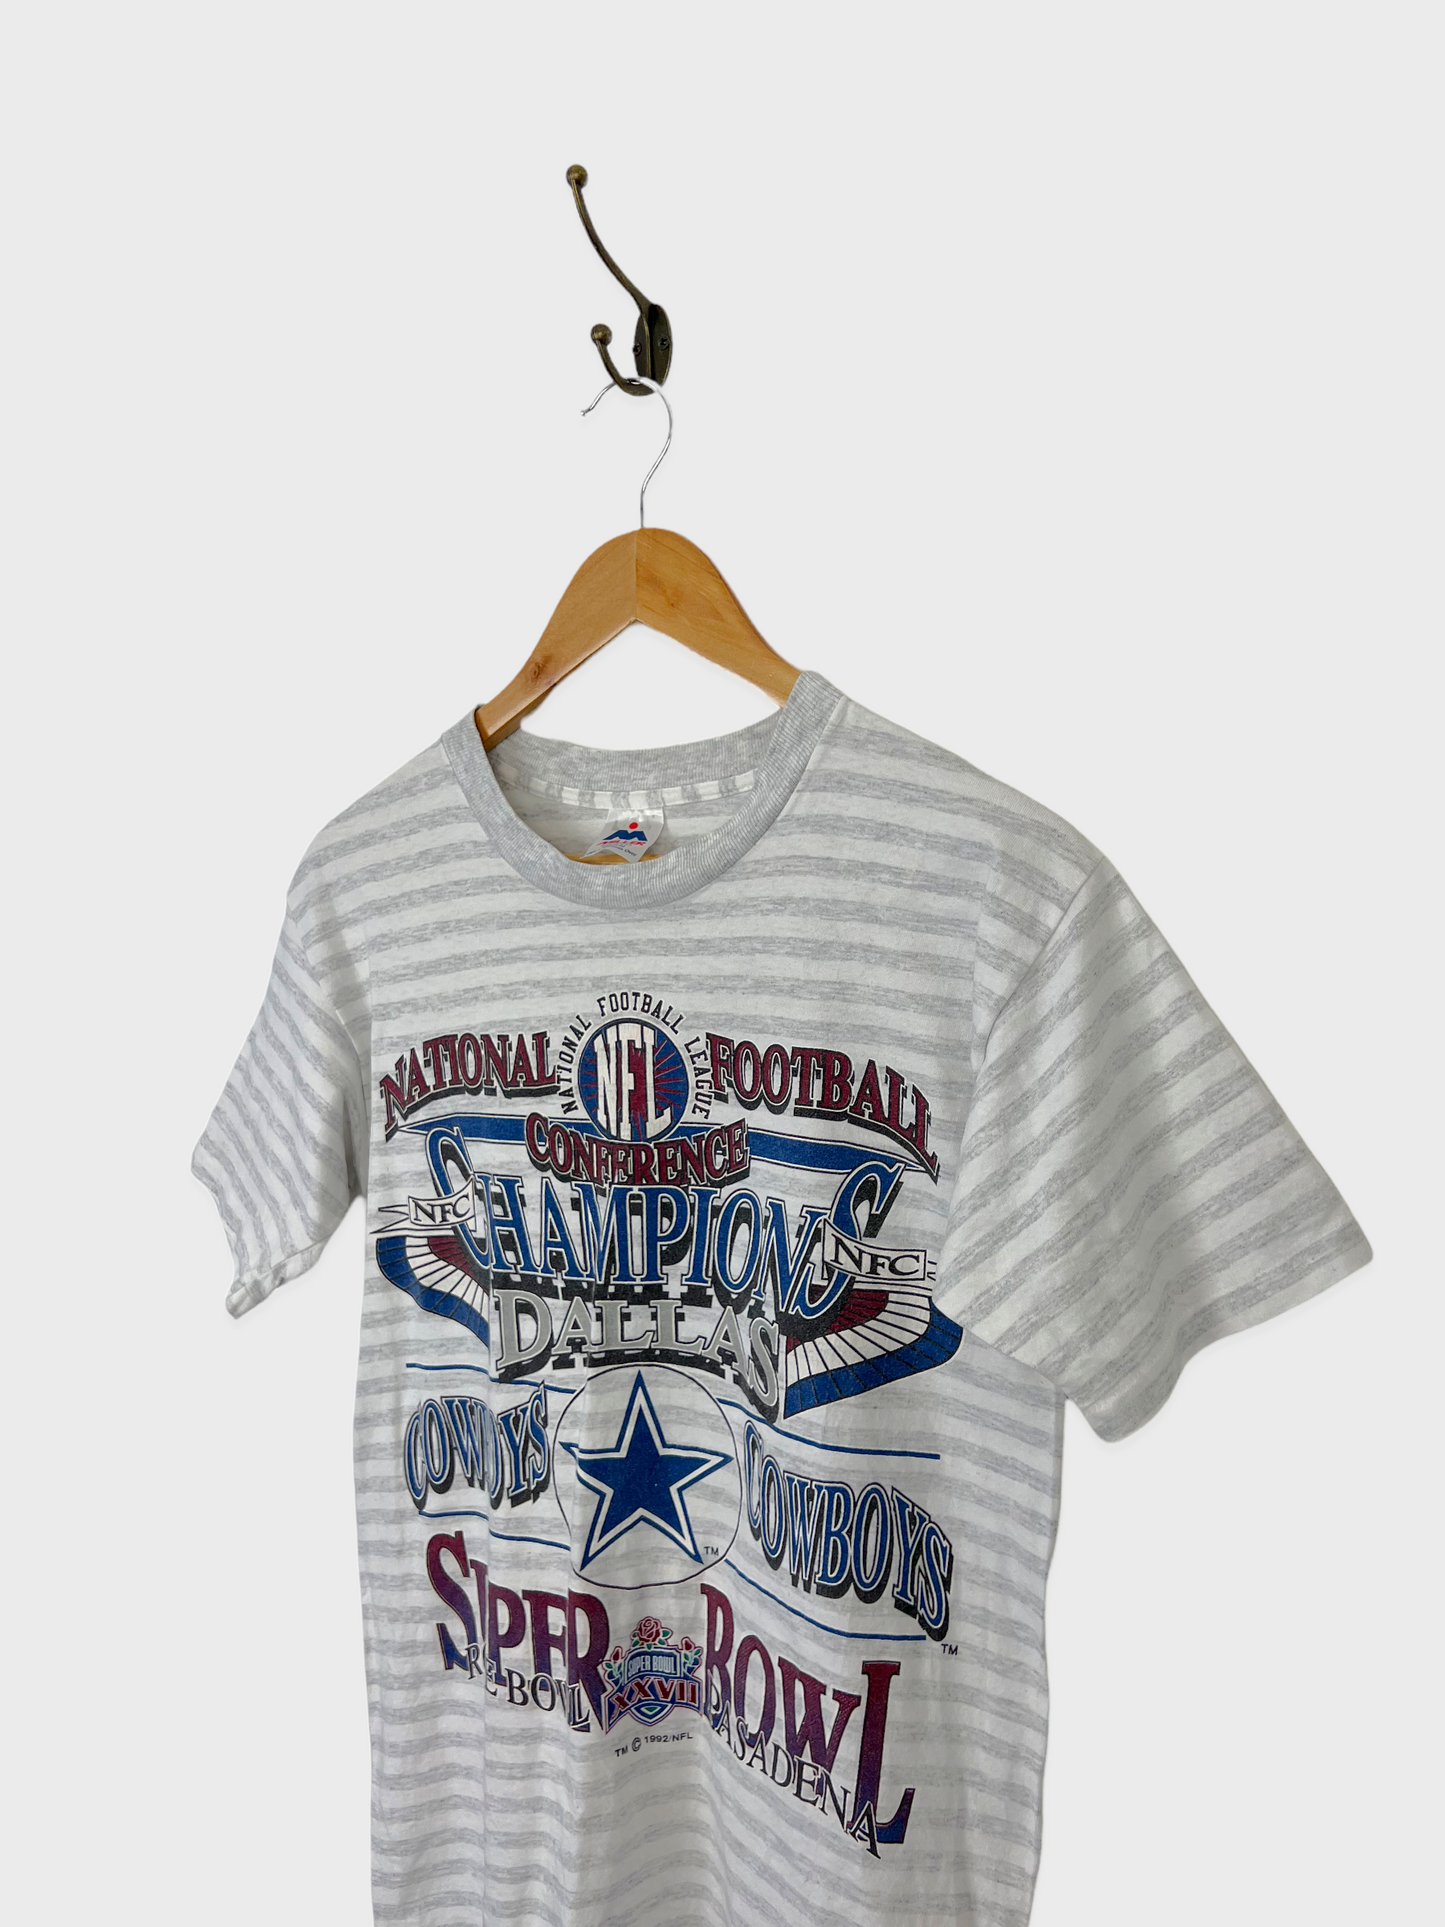 1992 Dallas Cowboys NFL USA Made Vintage T-Shirt Size 6